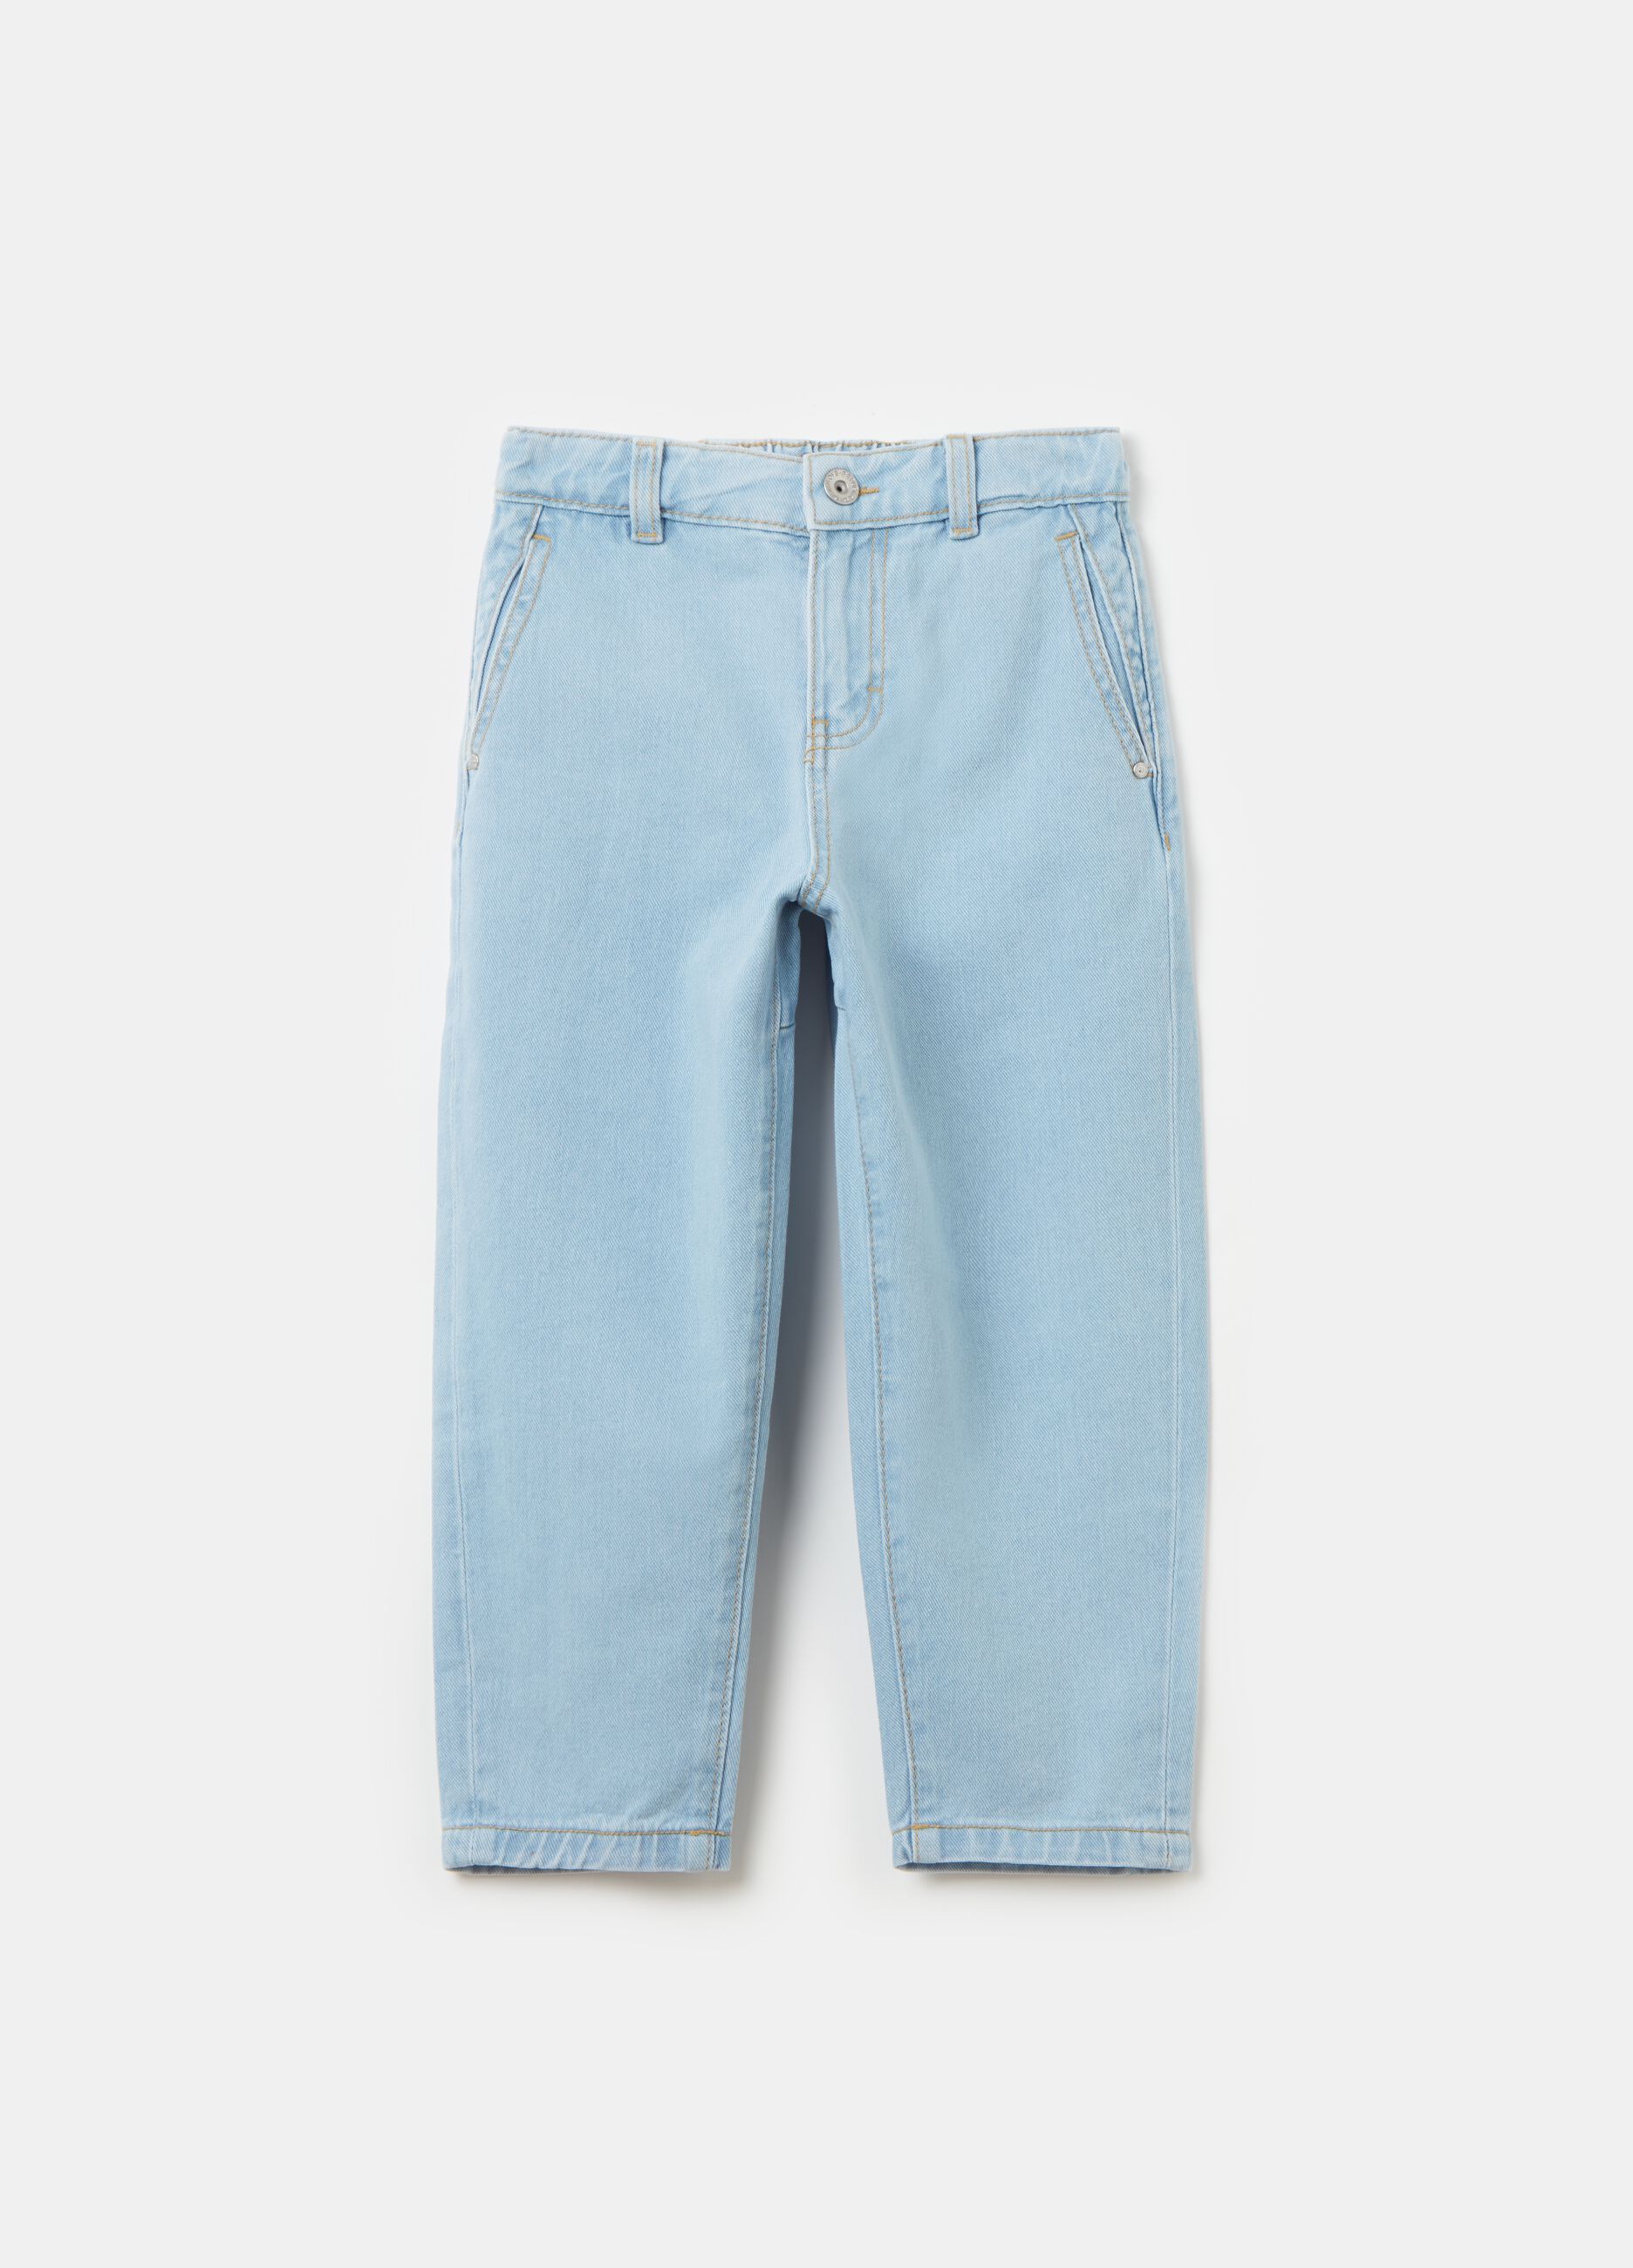 Men Comfort Fit Torn Denim Jeans, Age Group: 18-99 at Rs 560/no in Vadodara